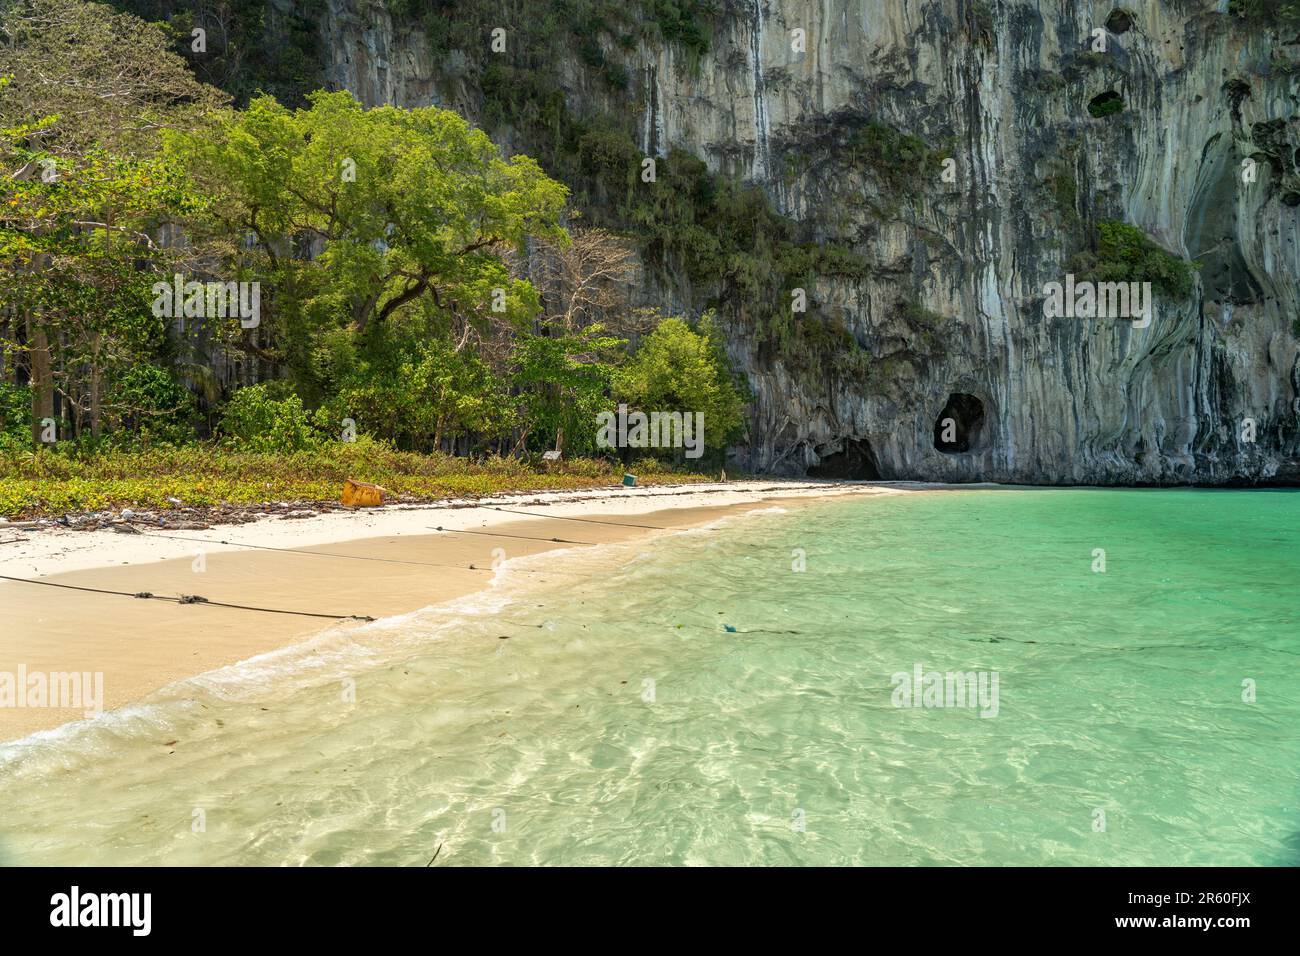 Steile Karstfelsen und Strand der Insel Koh Lao Liang, Thailand, Asien   |  limestone cliffs and beach of Ko Lao Liang islands, Thailand, Asia Stock Photo